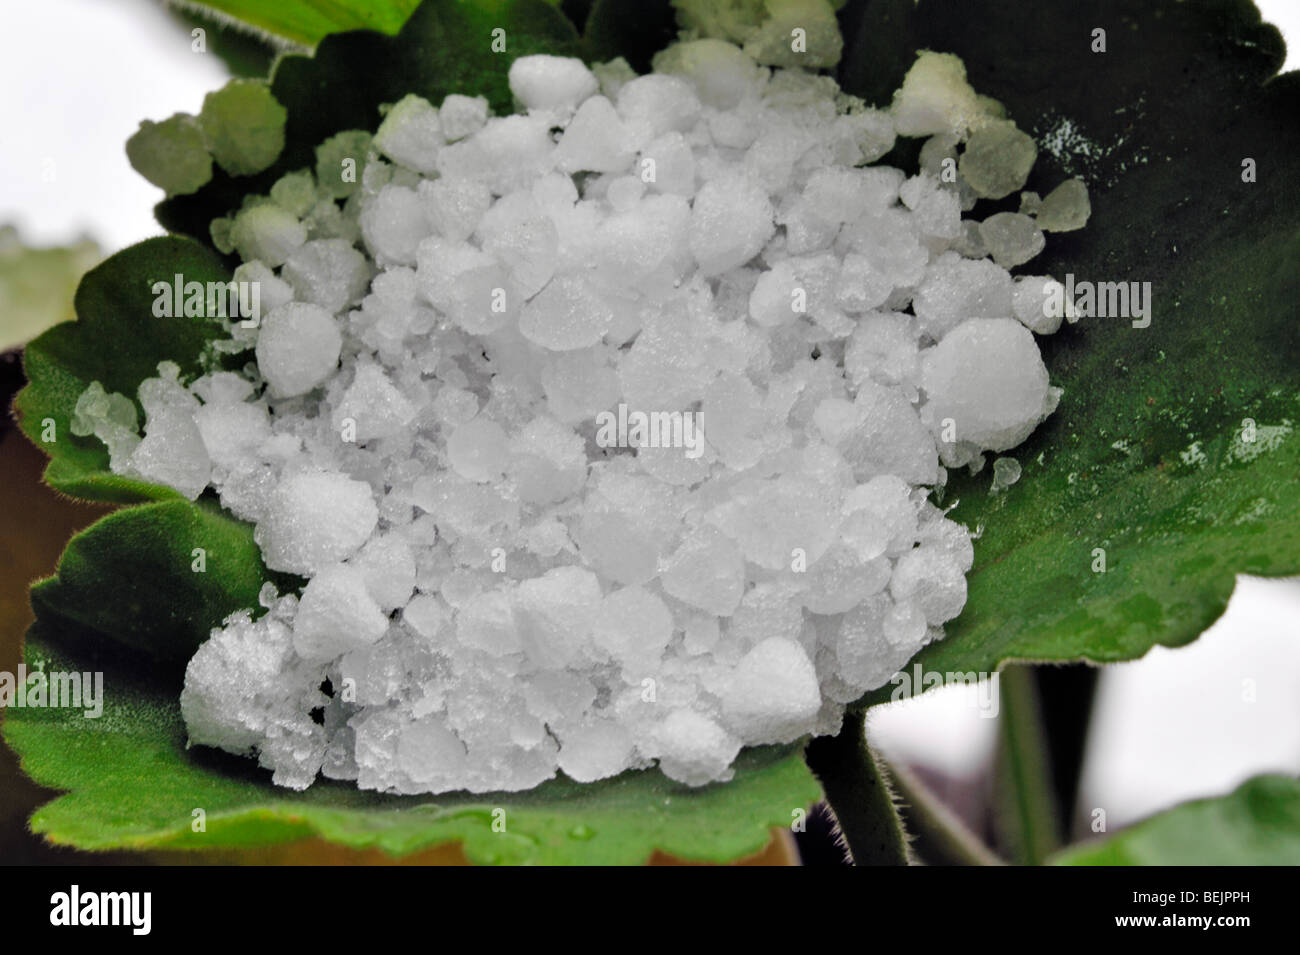 Hailstones on leaf after hailstorm, Belgium Stock Photo